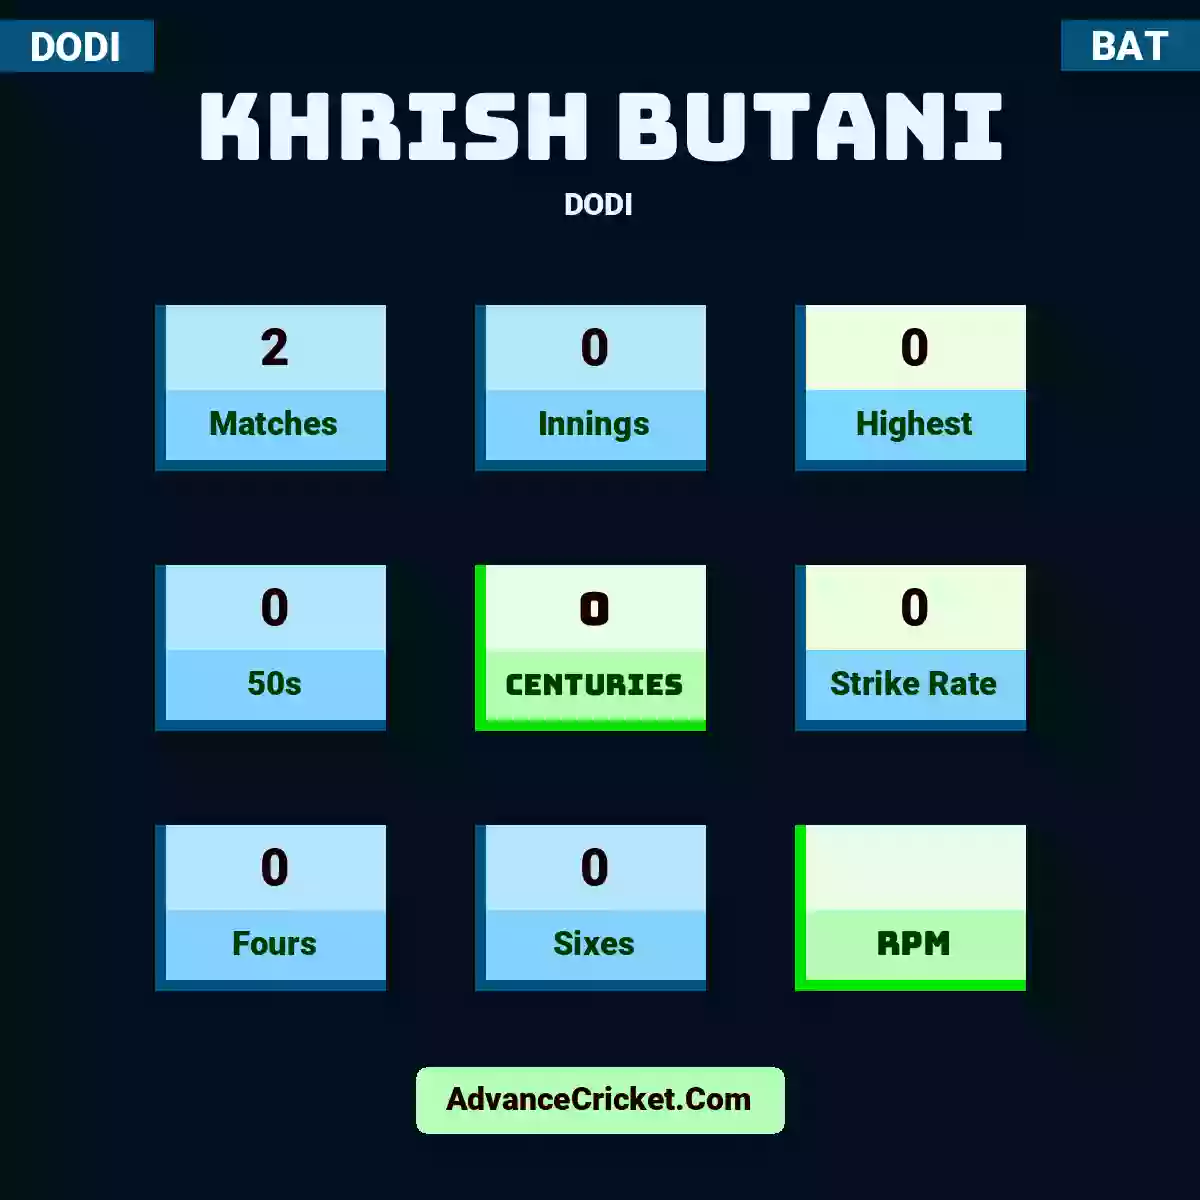 Khrish Butani DODI , Khrish Butani played 2 matches, scored 0 runs as highest, 0 half-centuries, and 0 centuries, with a strike rate of 0. K.Butani hit 0 fours and 0 sixes.